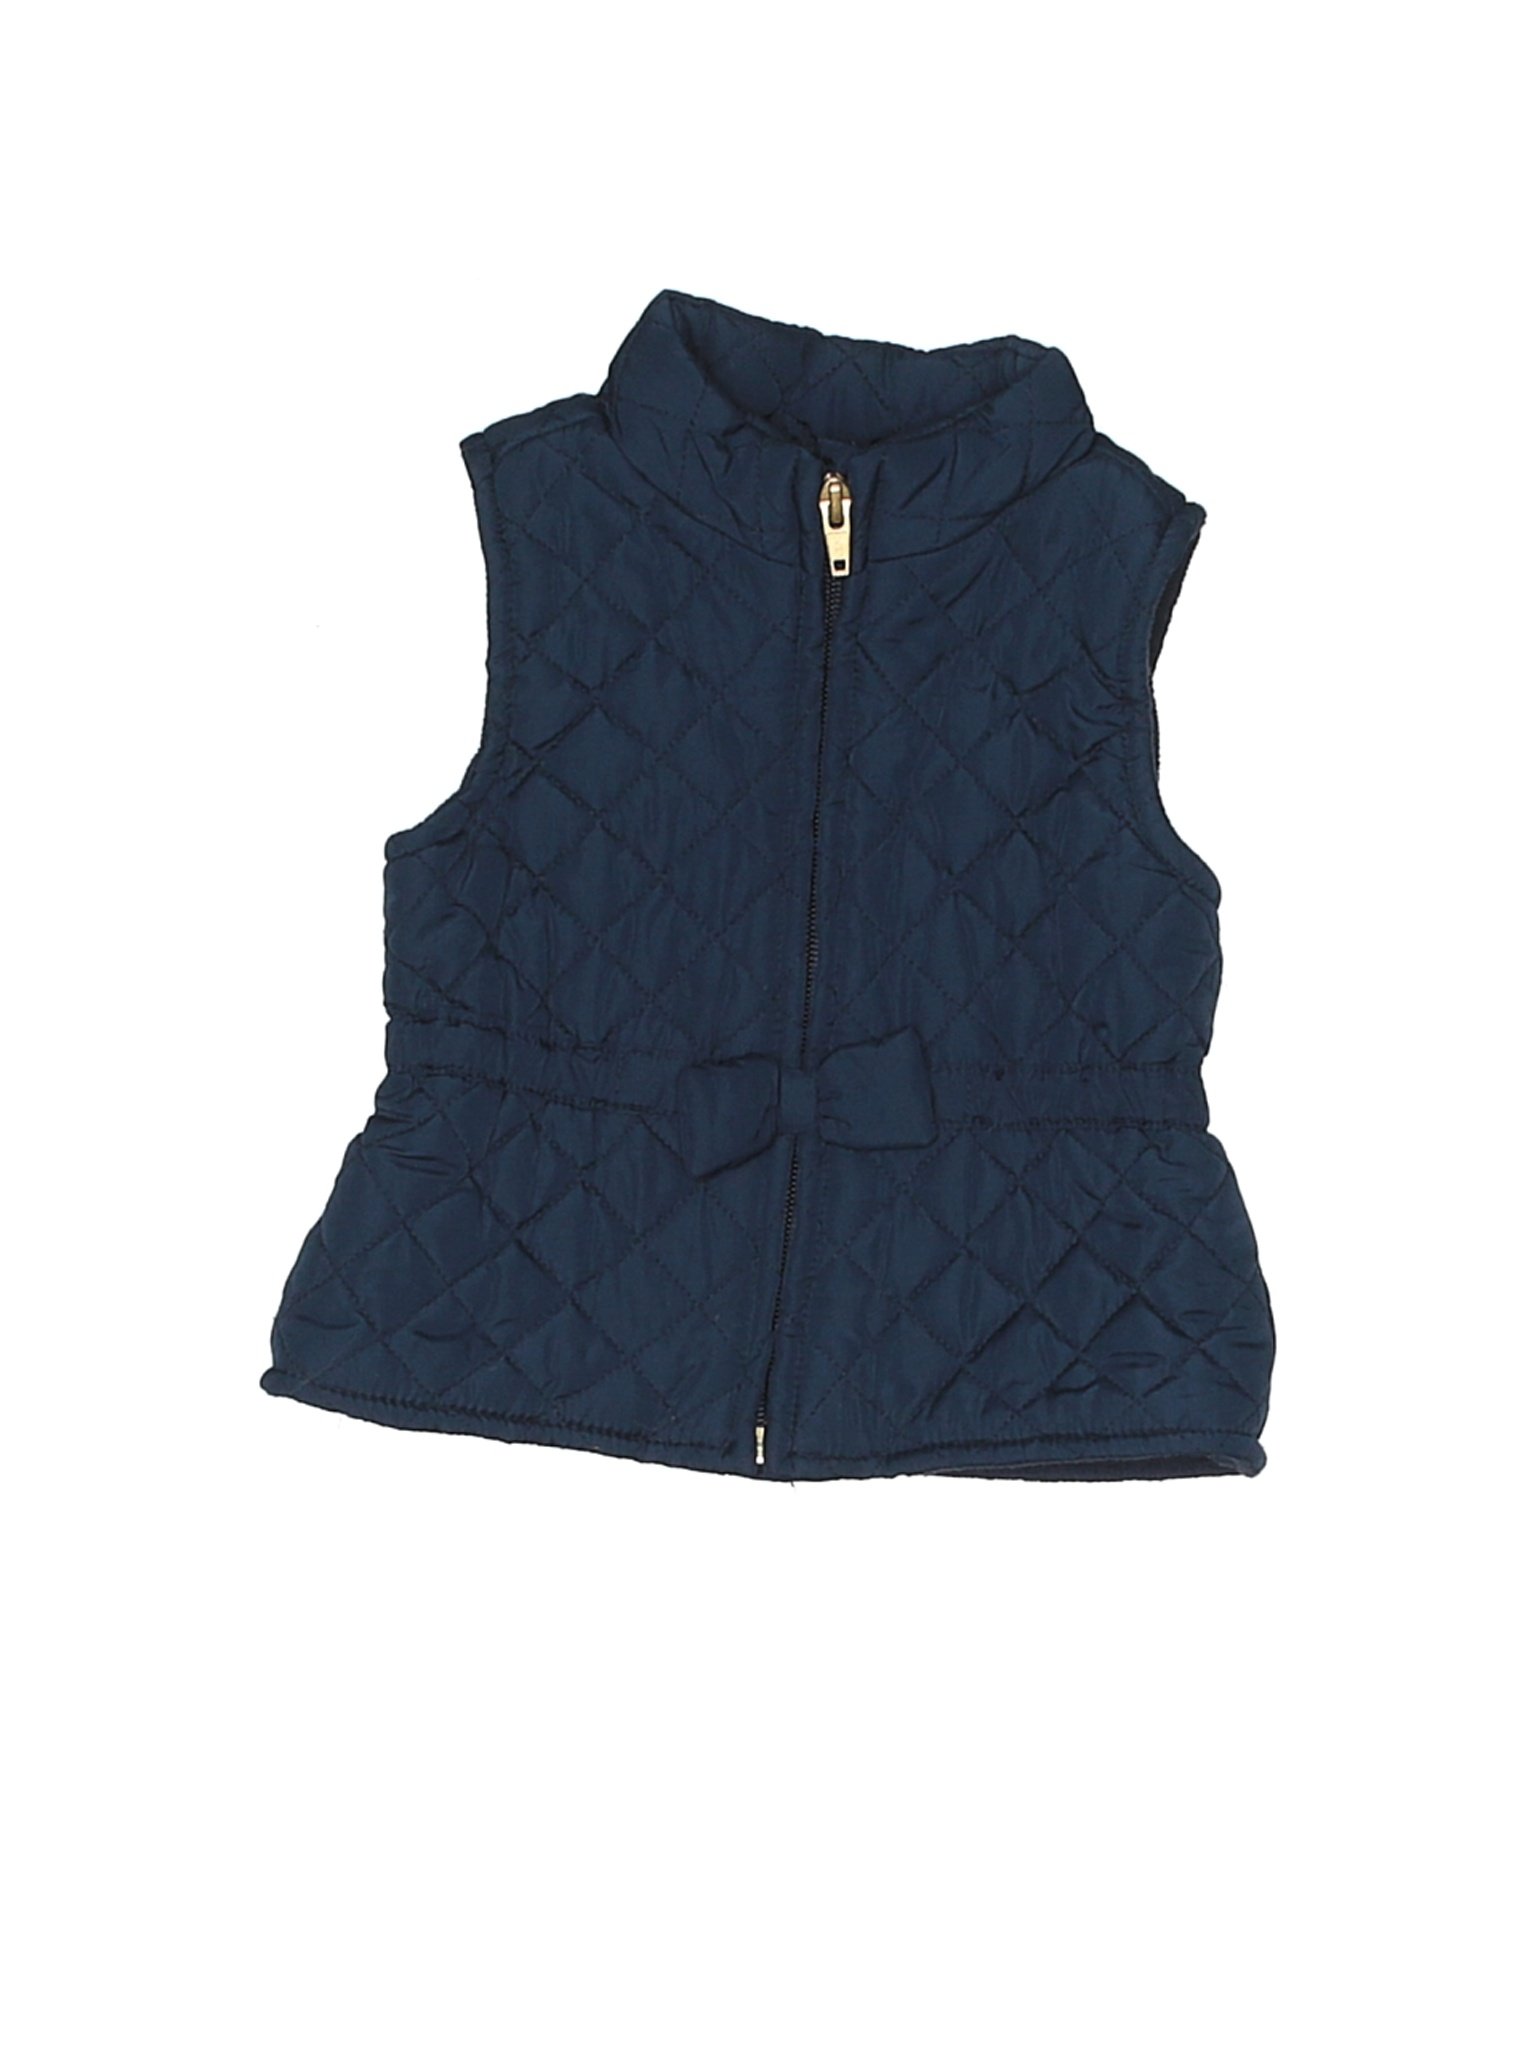 Old Navy Girls Blue Vest 12-18 Months | eBay